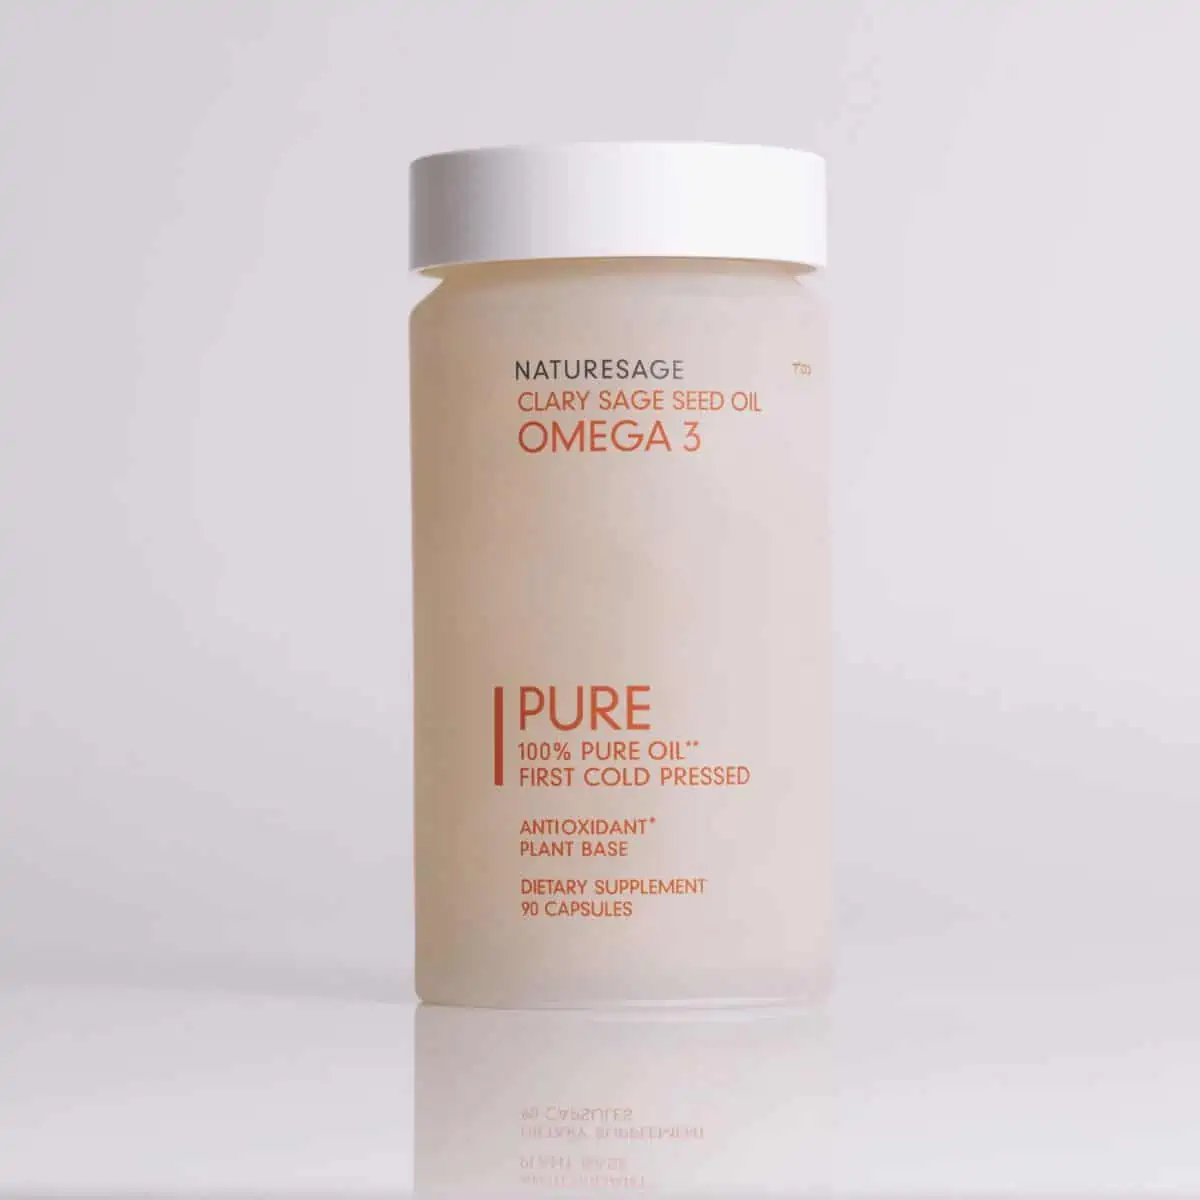 Naturesage Omega-3 clary sage seed oil bottle. 